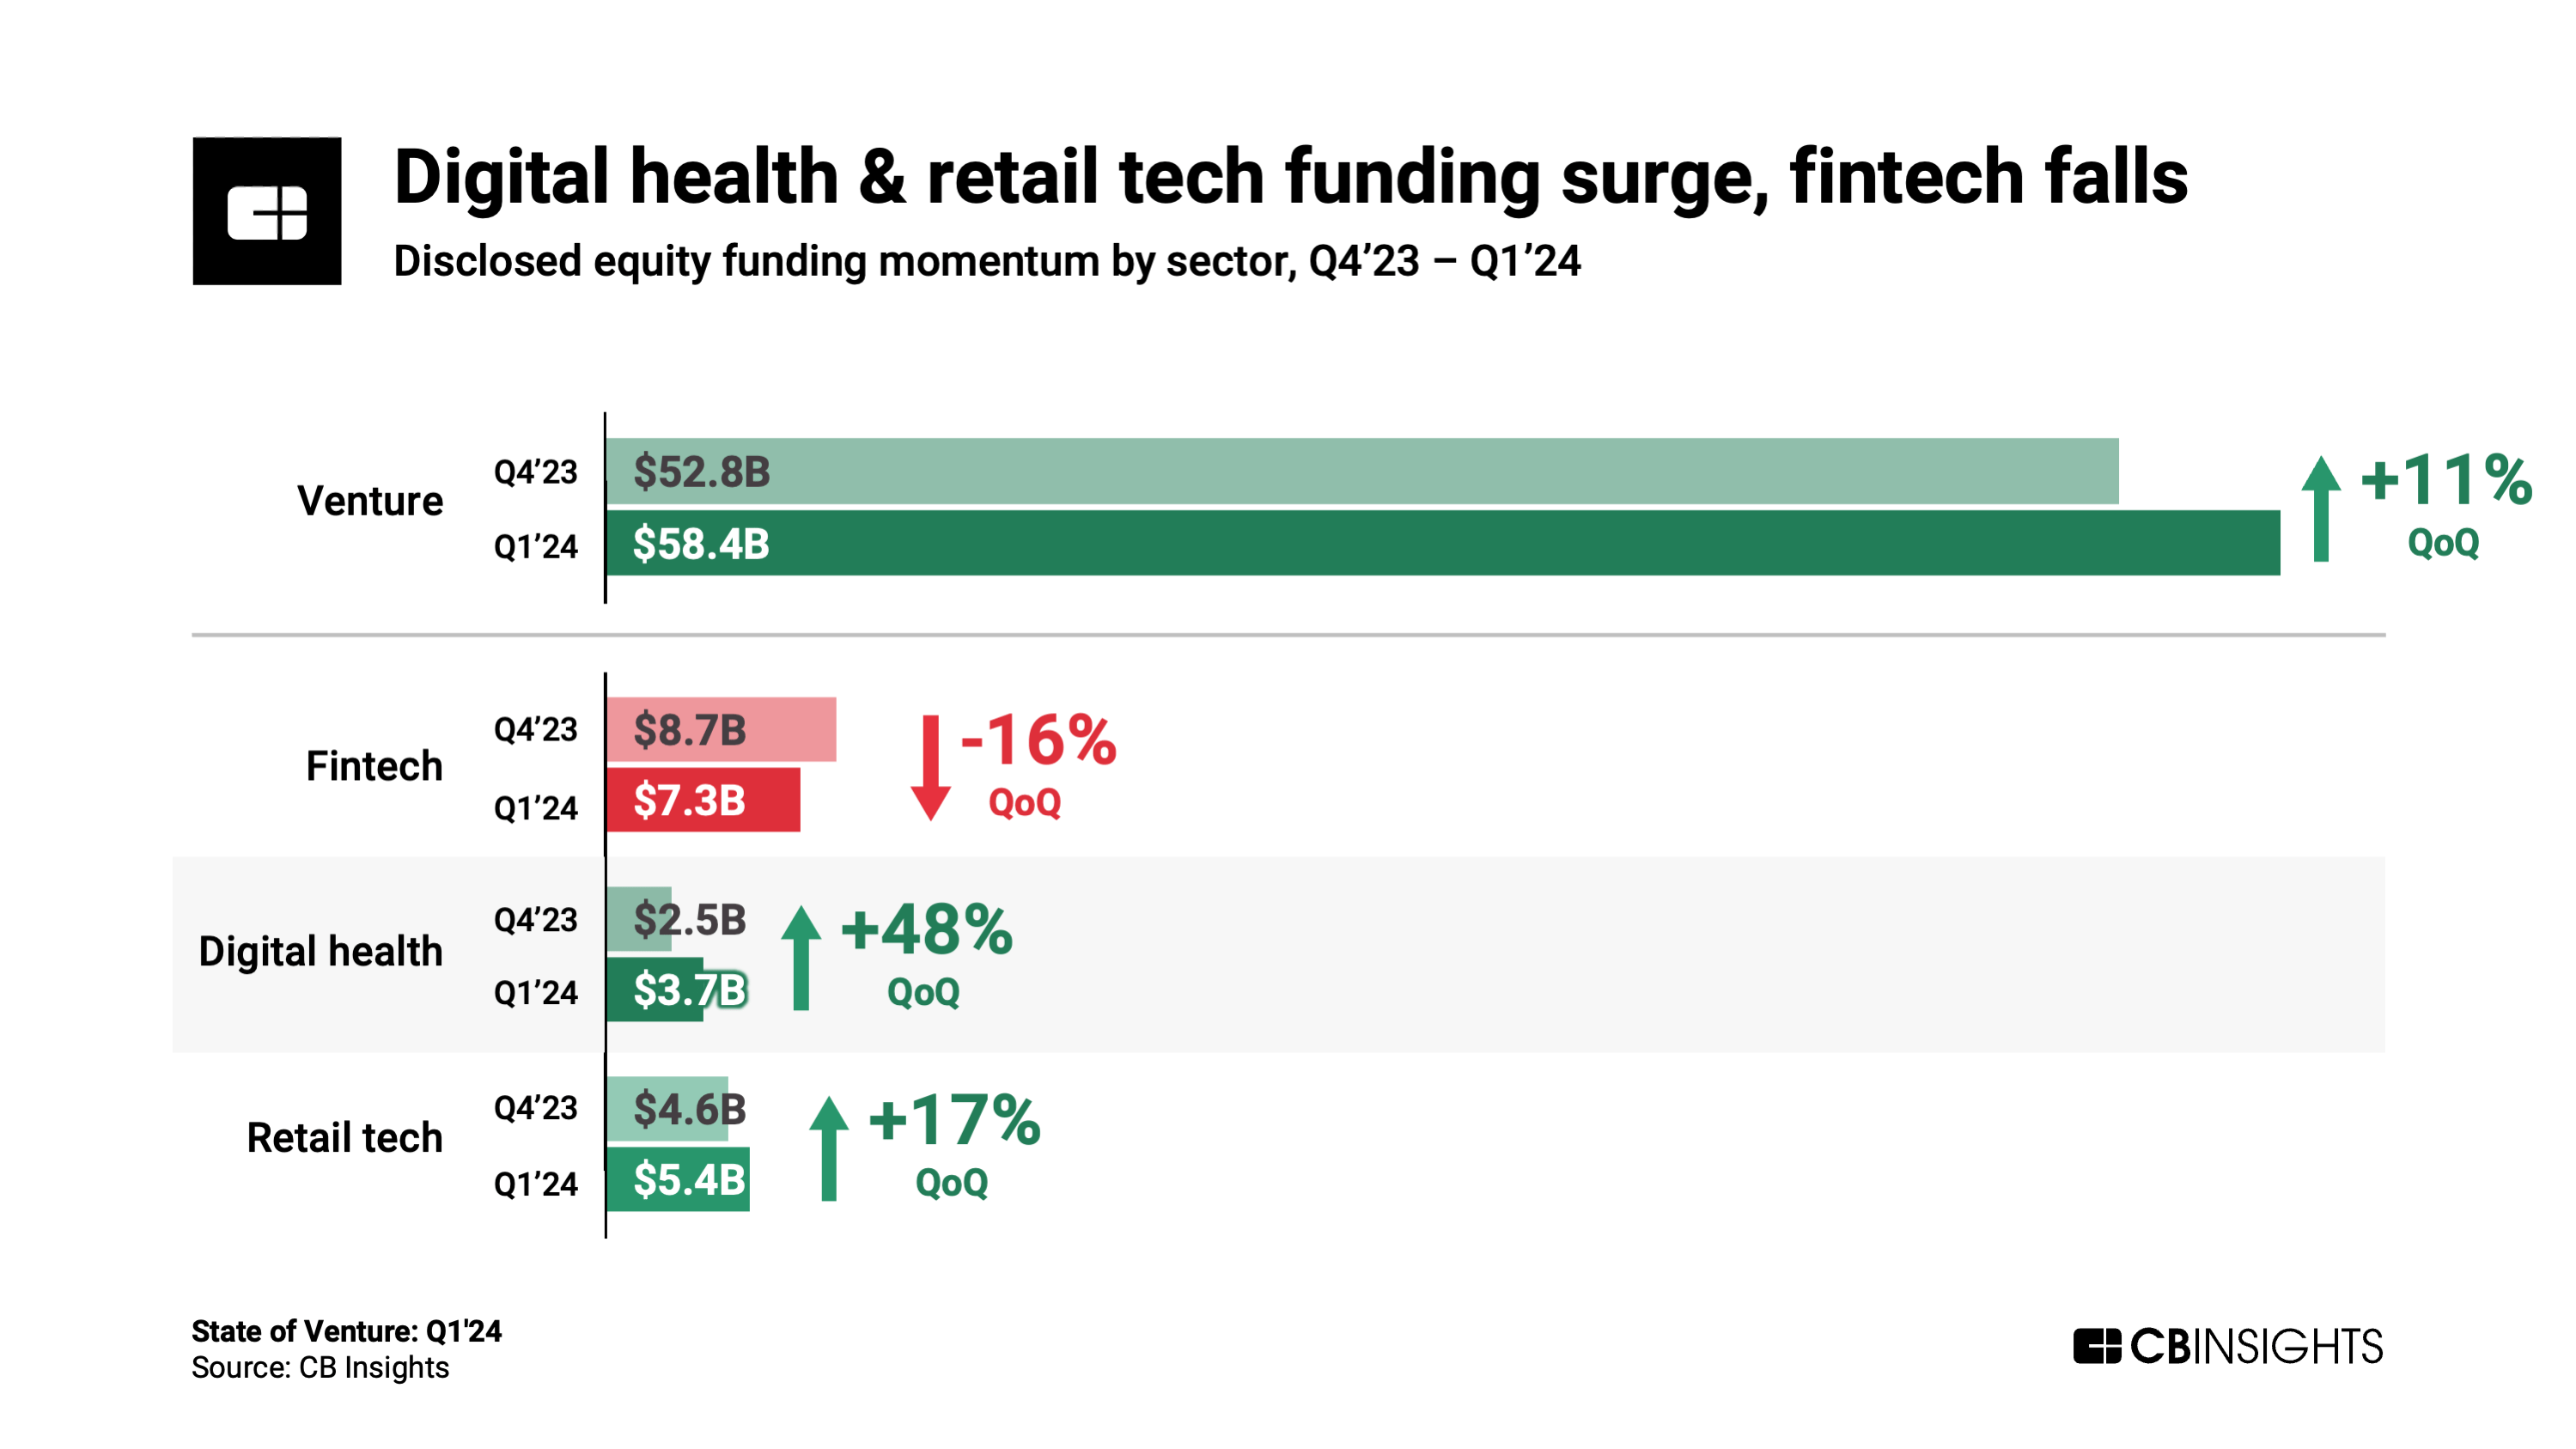 Digital health & retail tech funding surge, fintech falls in Q1'24